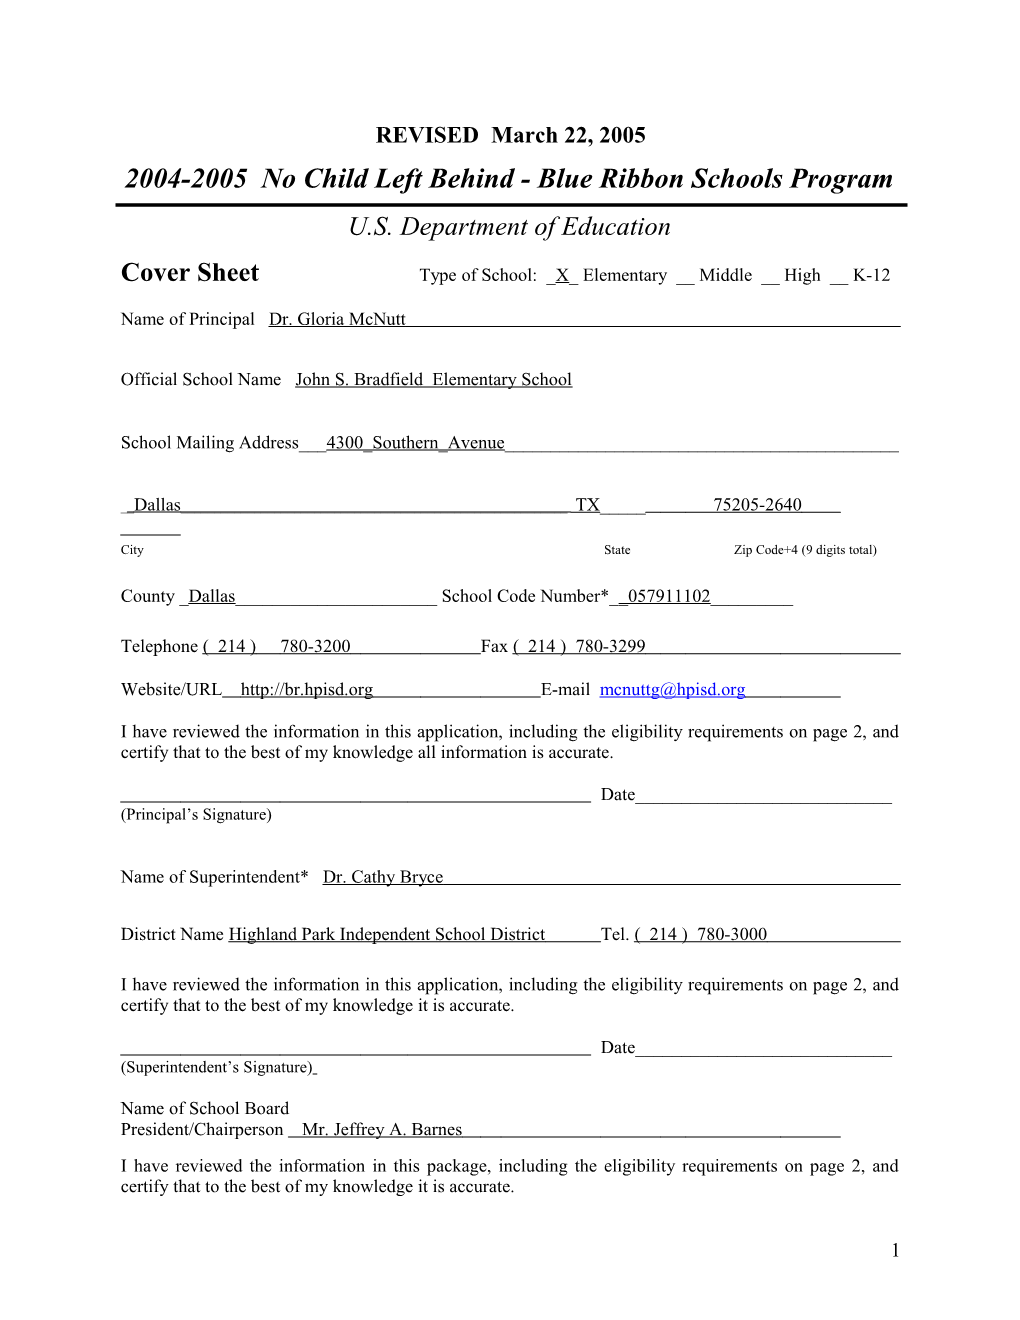 John S. Bradfield Elementary School Application: 2004-2005, No Child Left Behind - Blue